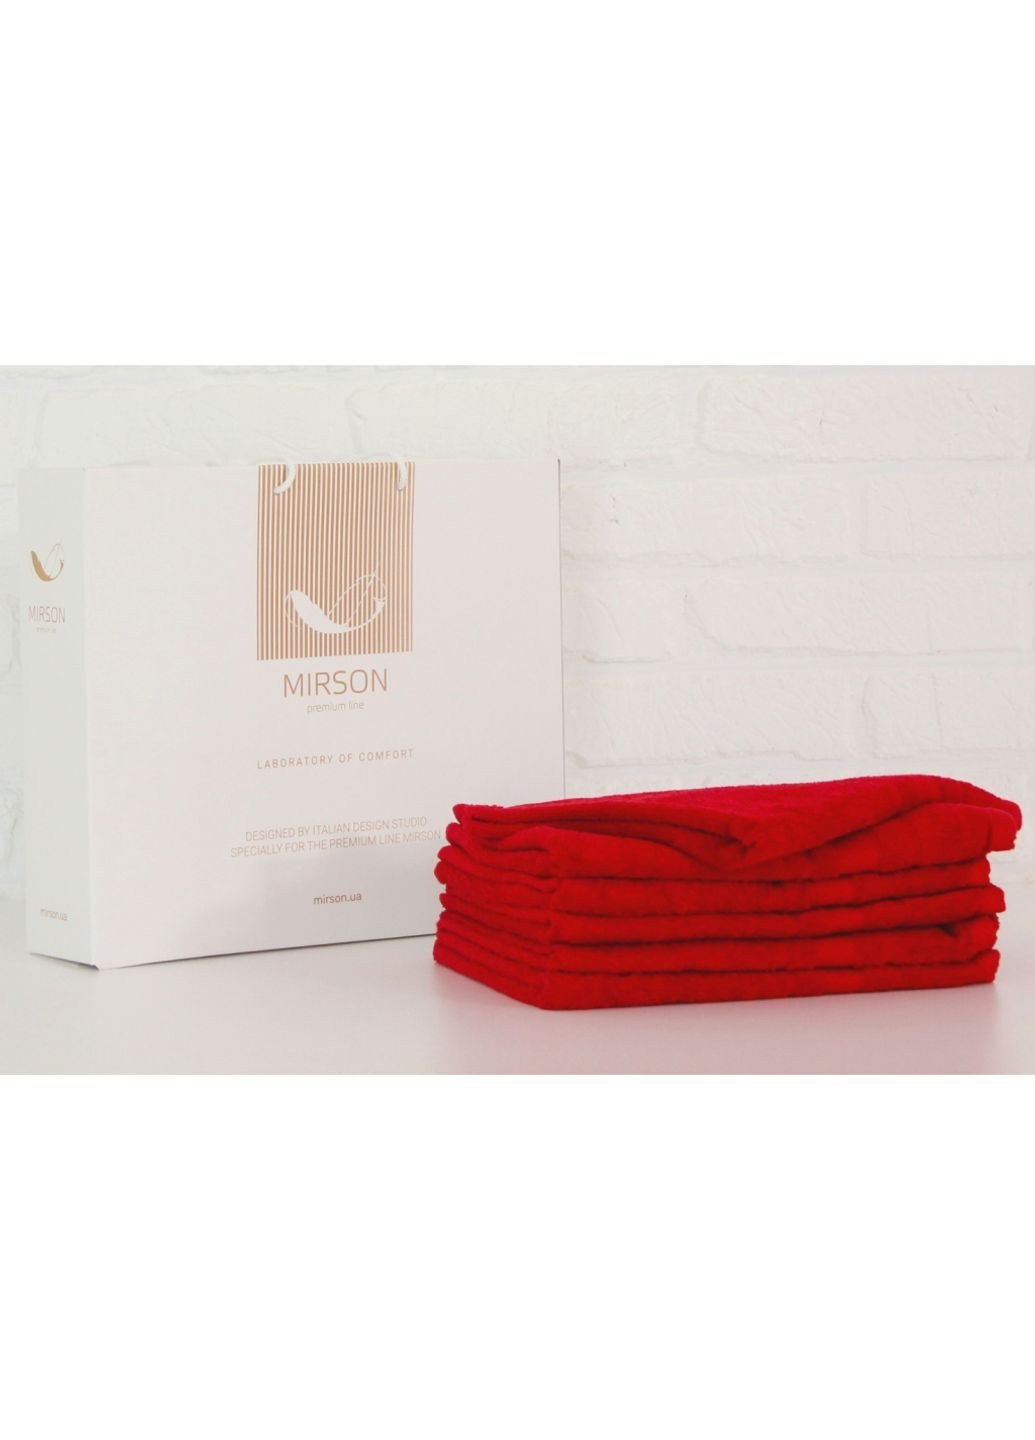 No Brand полотенце mirson набор банный №5070 elite softness bordo 50х90 6 шт (2200003523942) красный производство - Украина